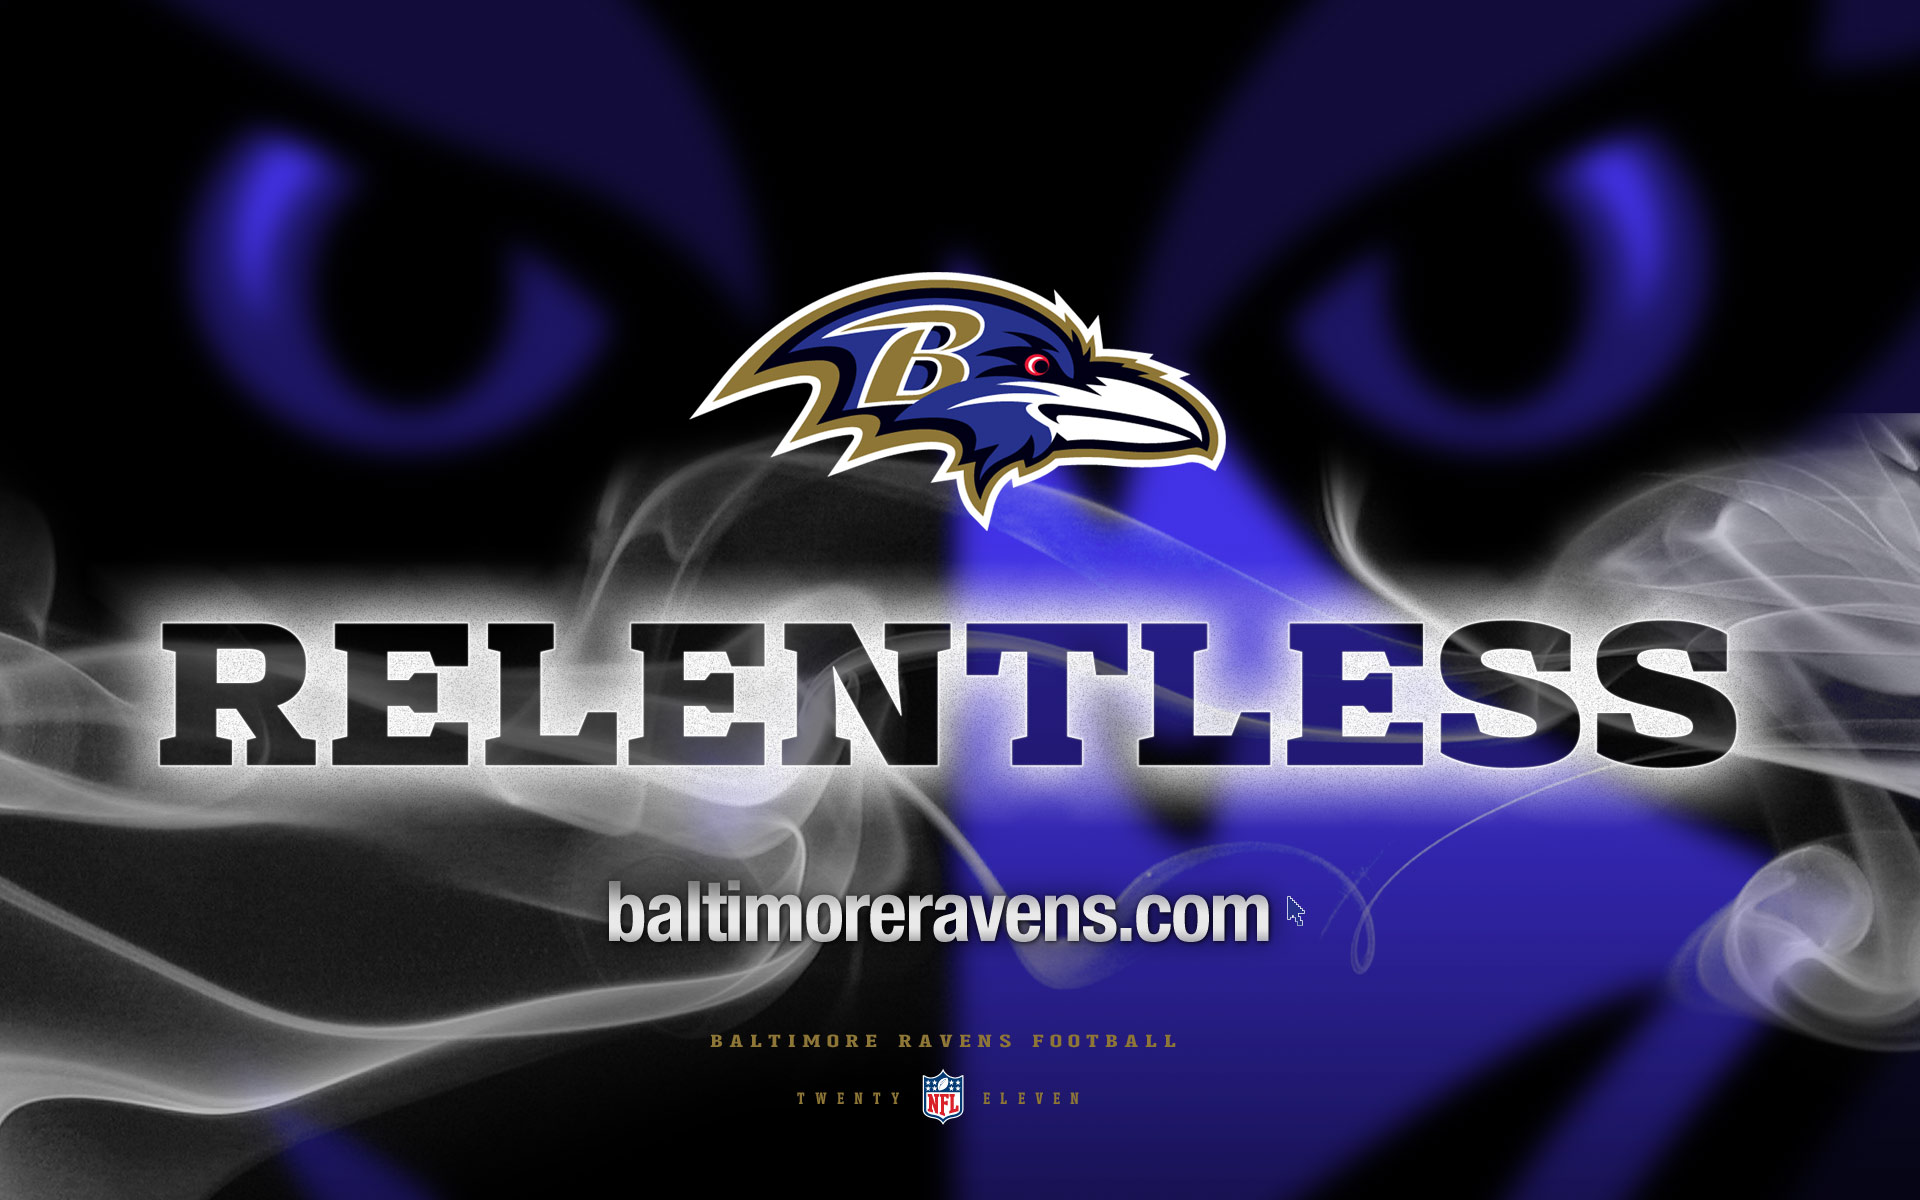  Baltimore Ravens wallpaper desktop wallpaper Baltimore Ravens 1920x1200